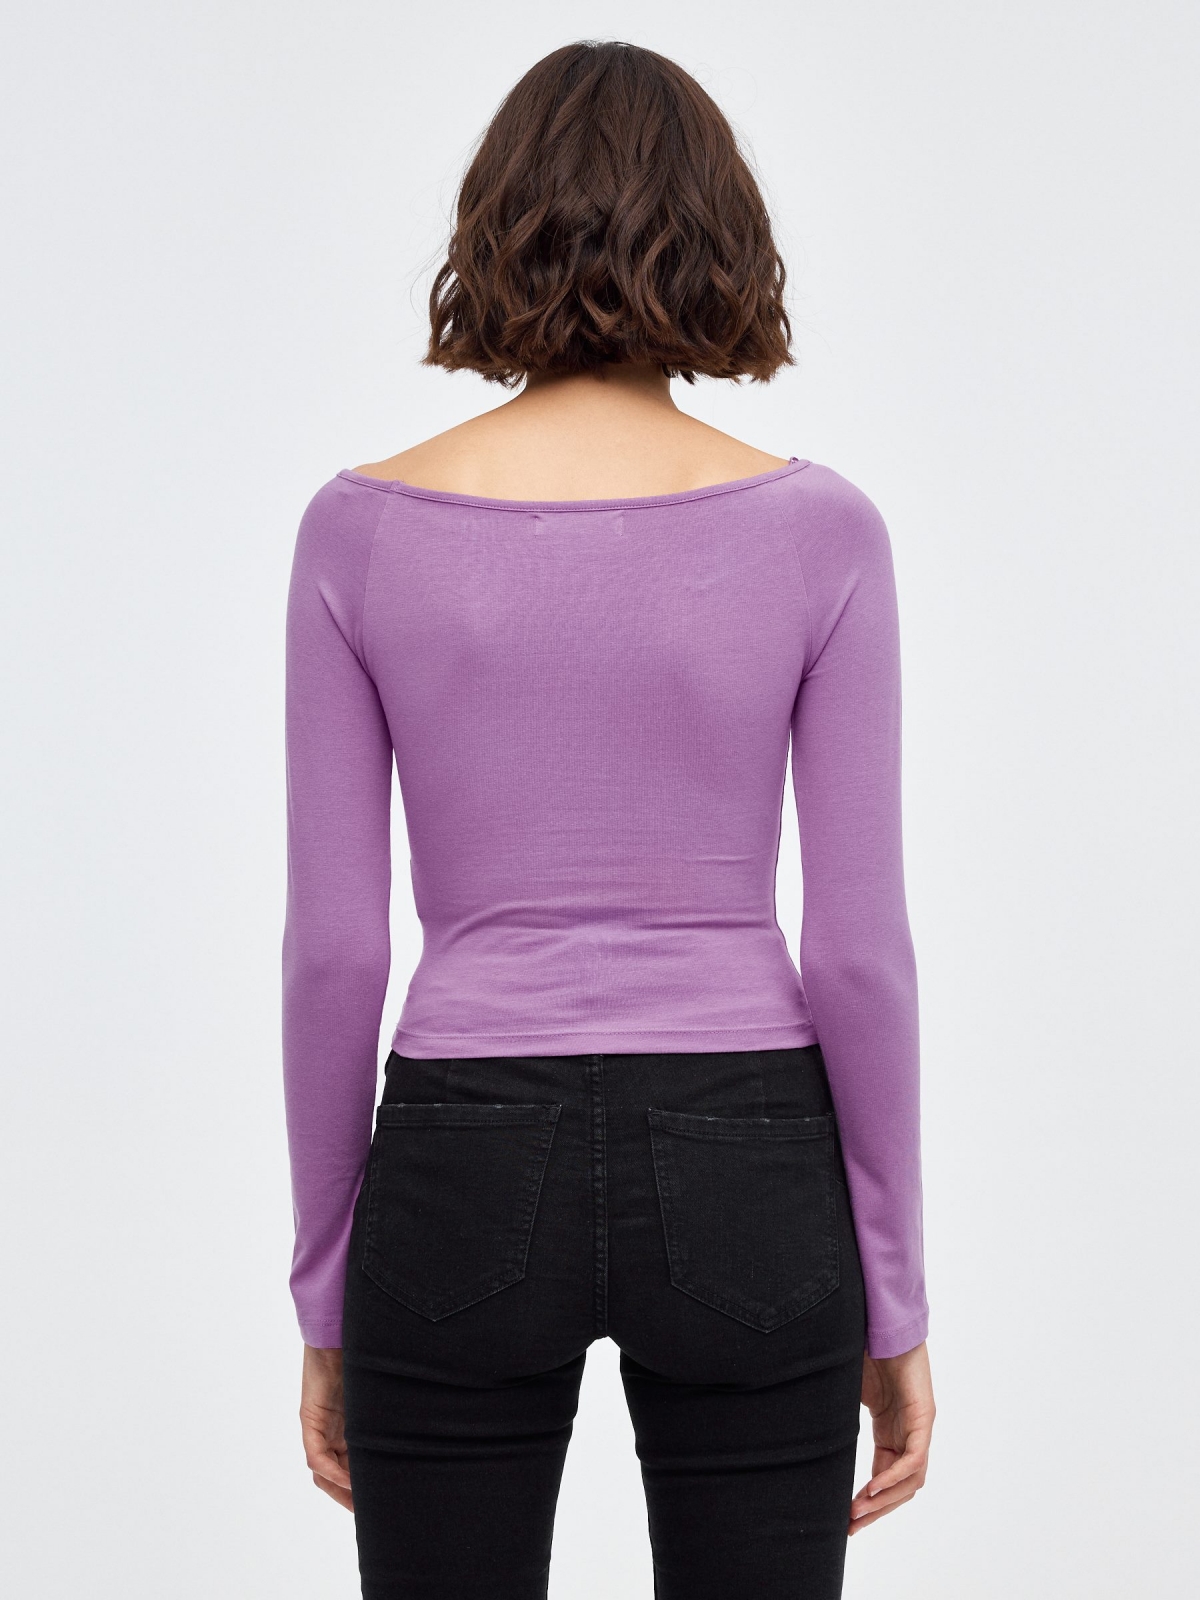 Raglan sleeve t-shirt purple middle back view